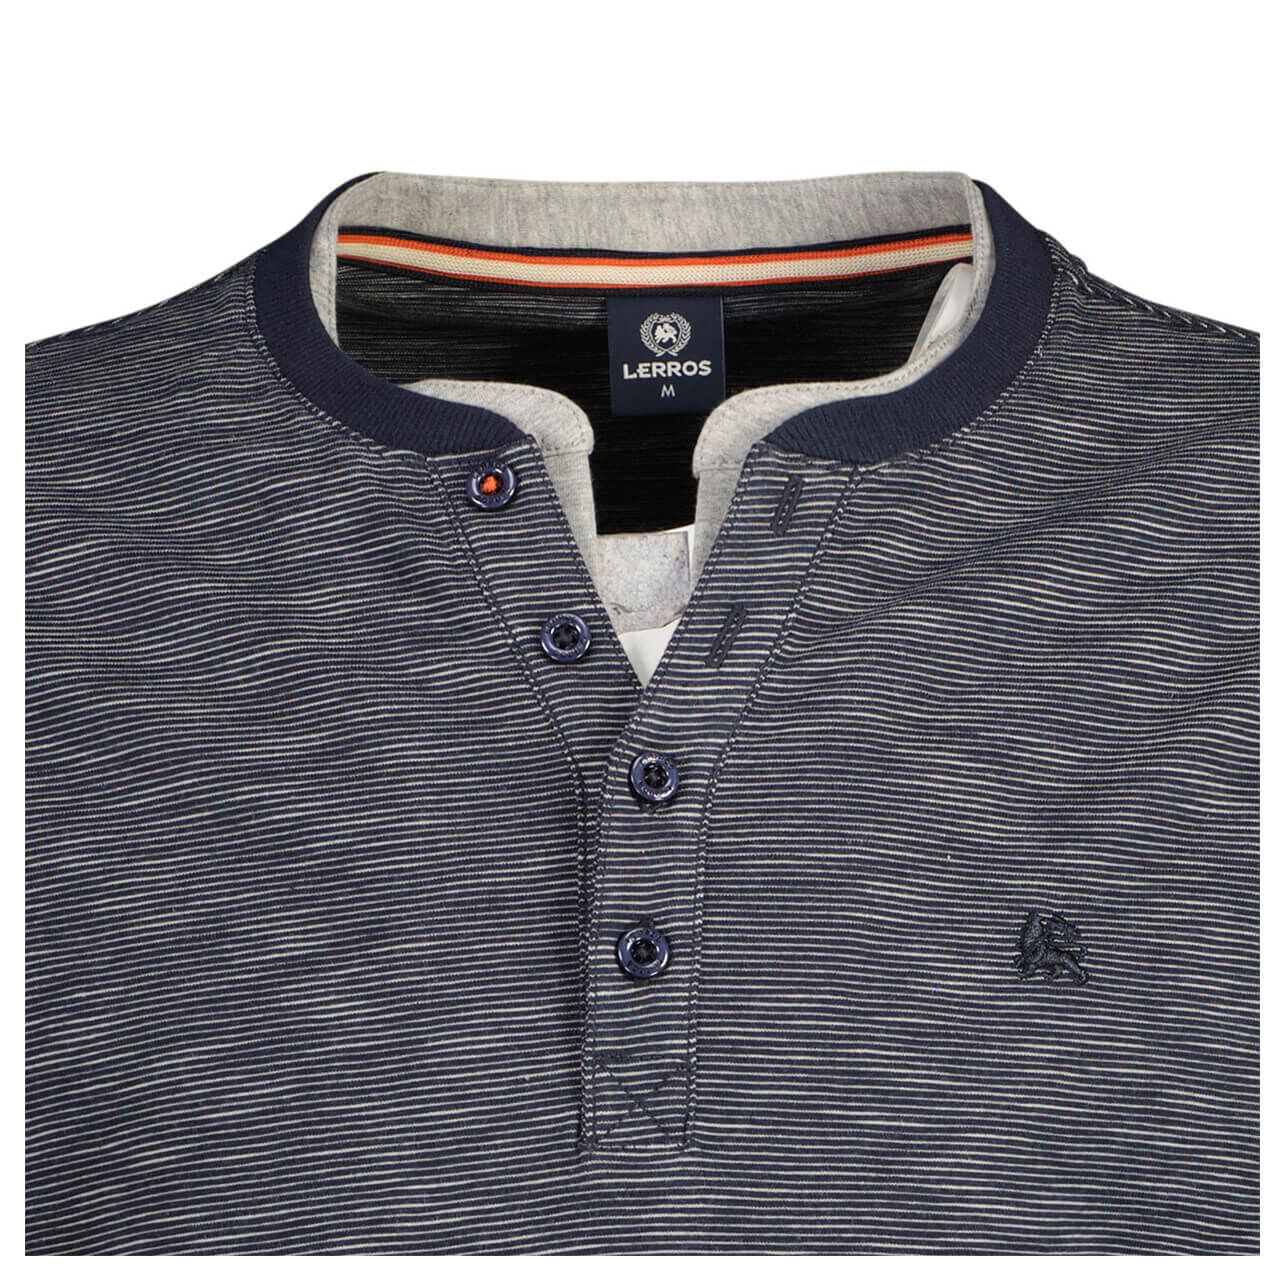 Lerros Herren Langarm Shirt vintage blue stripes